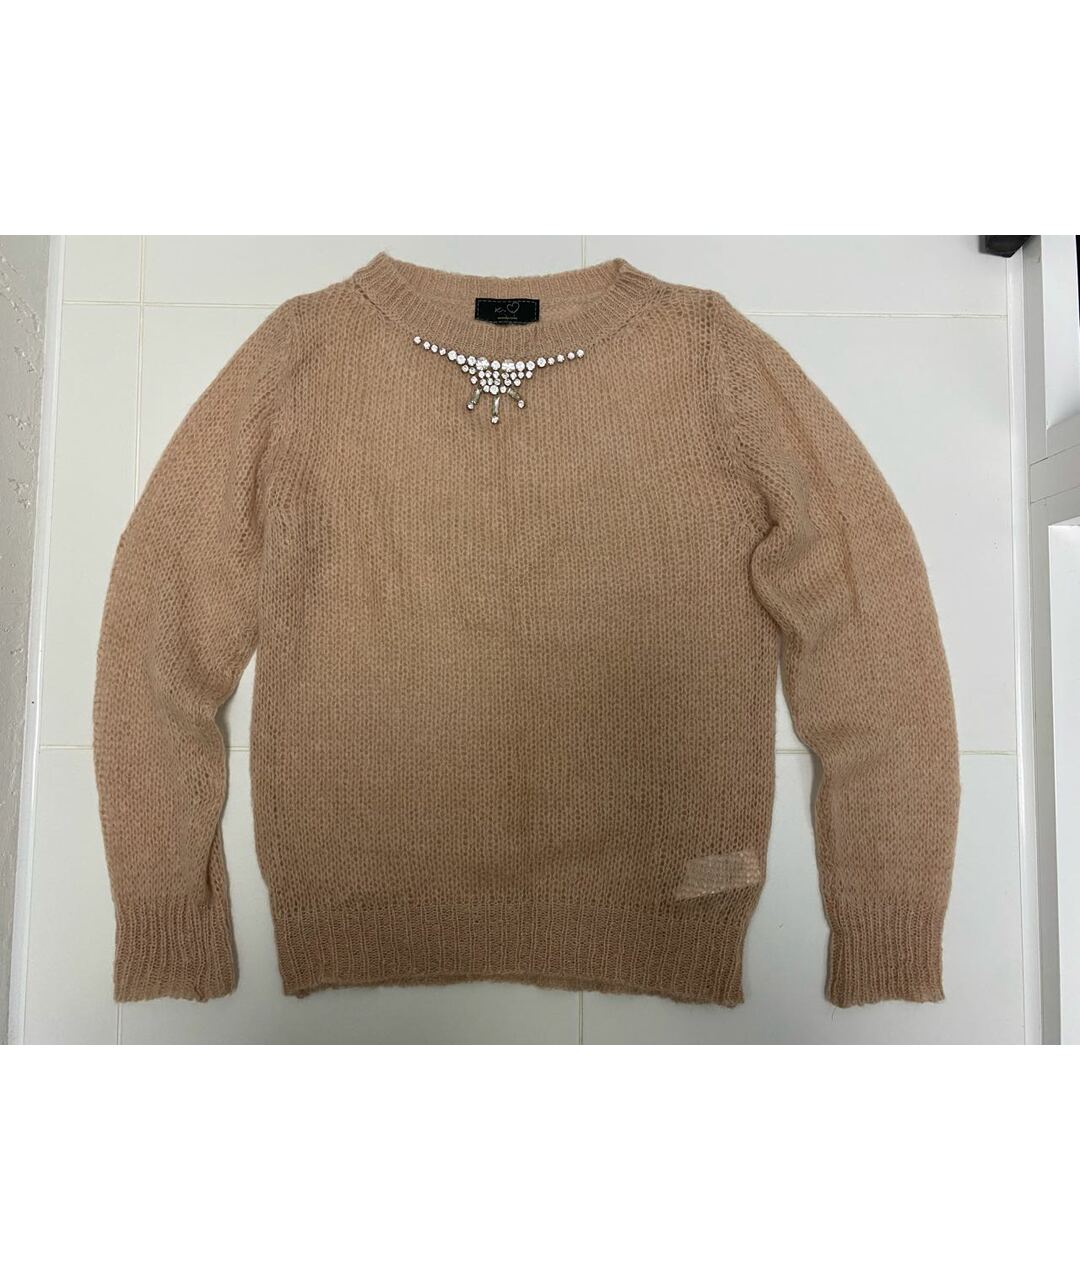 KI6 Бежевый шерстяной джемпер / свитер, фото 6